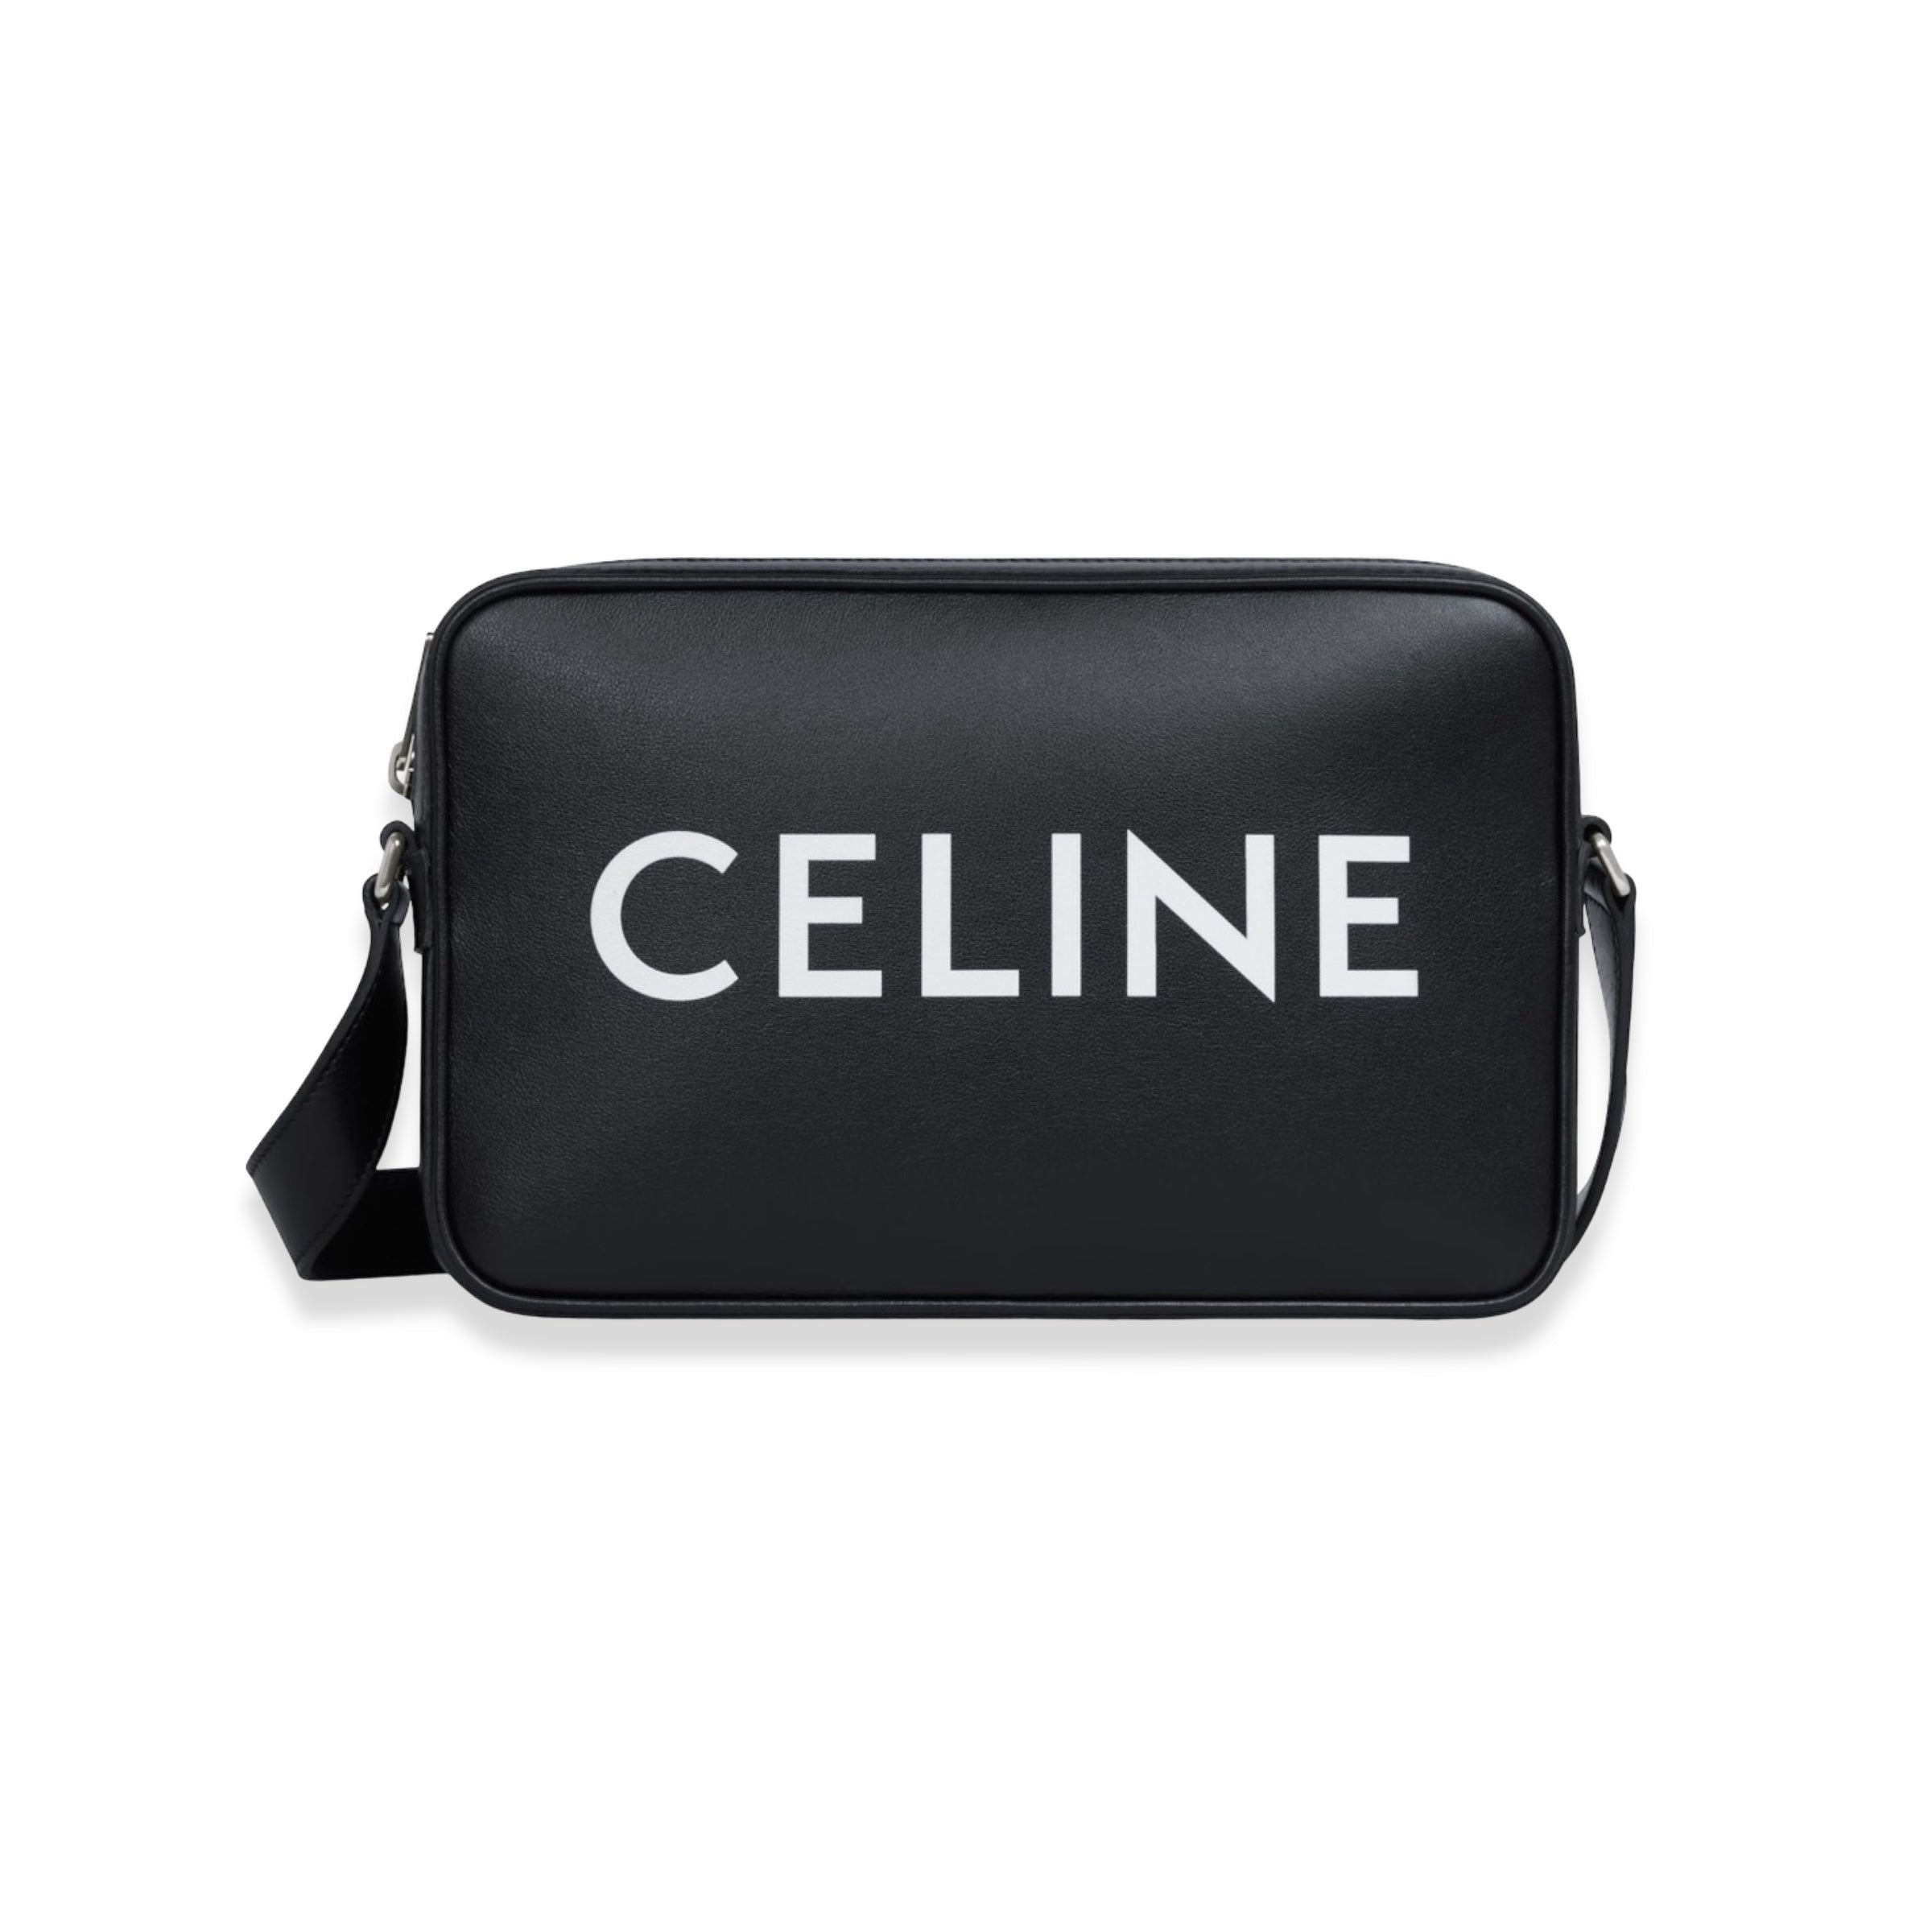 Celine - Black Logo Messenger Bag Medium